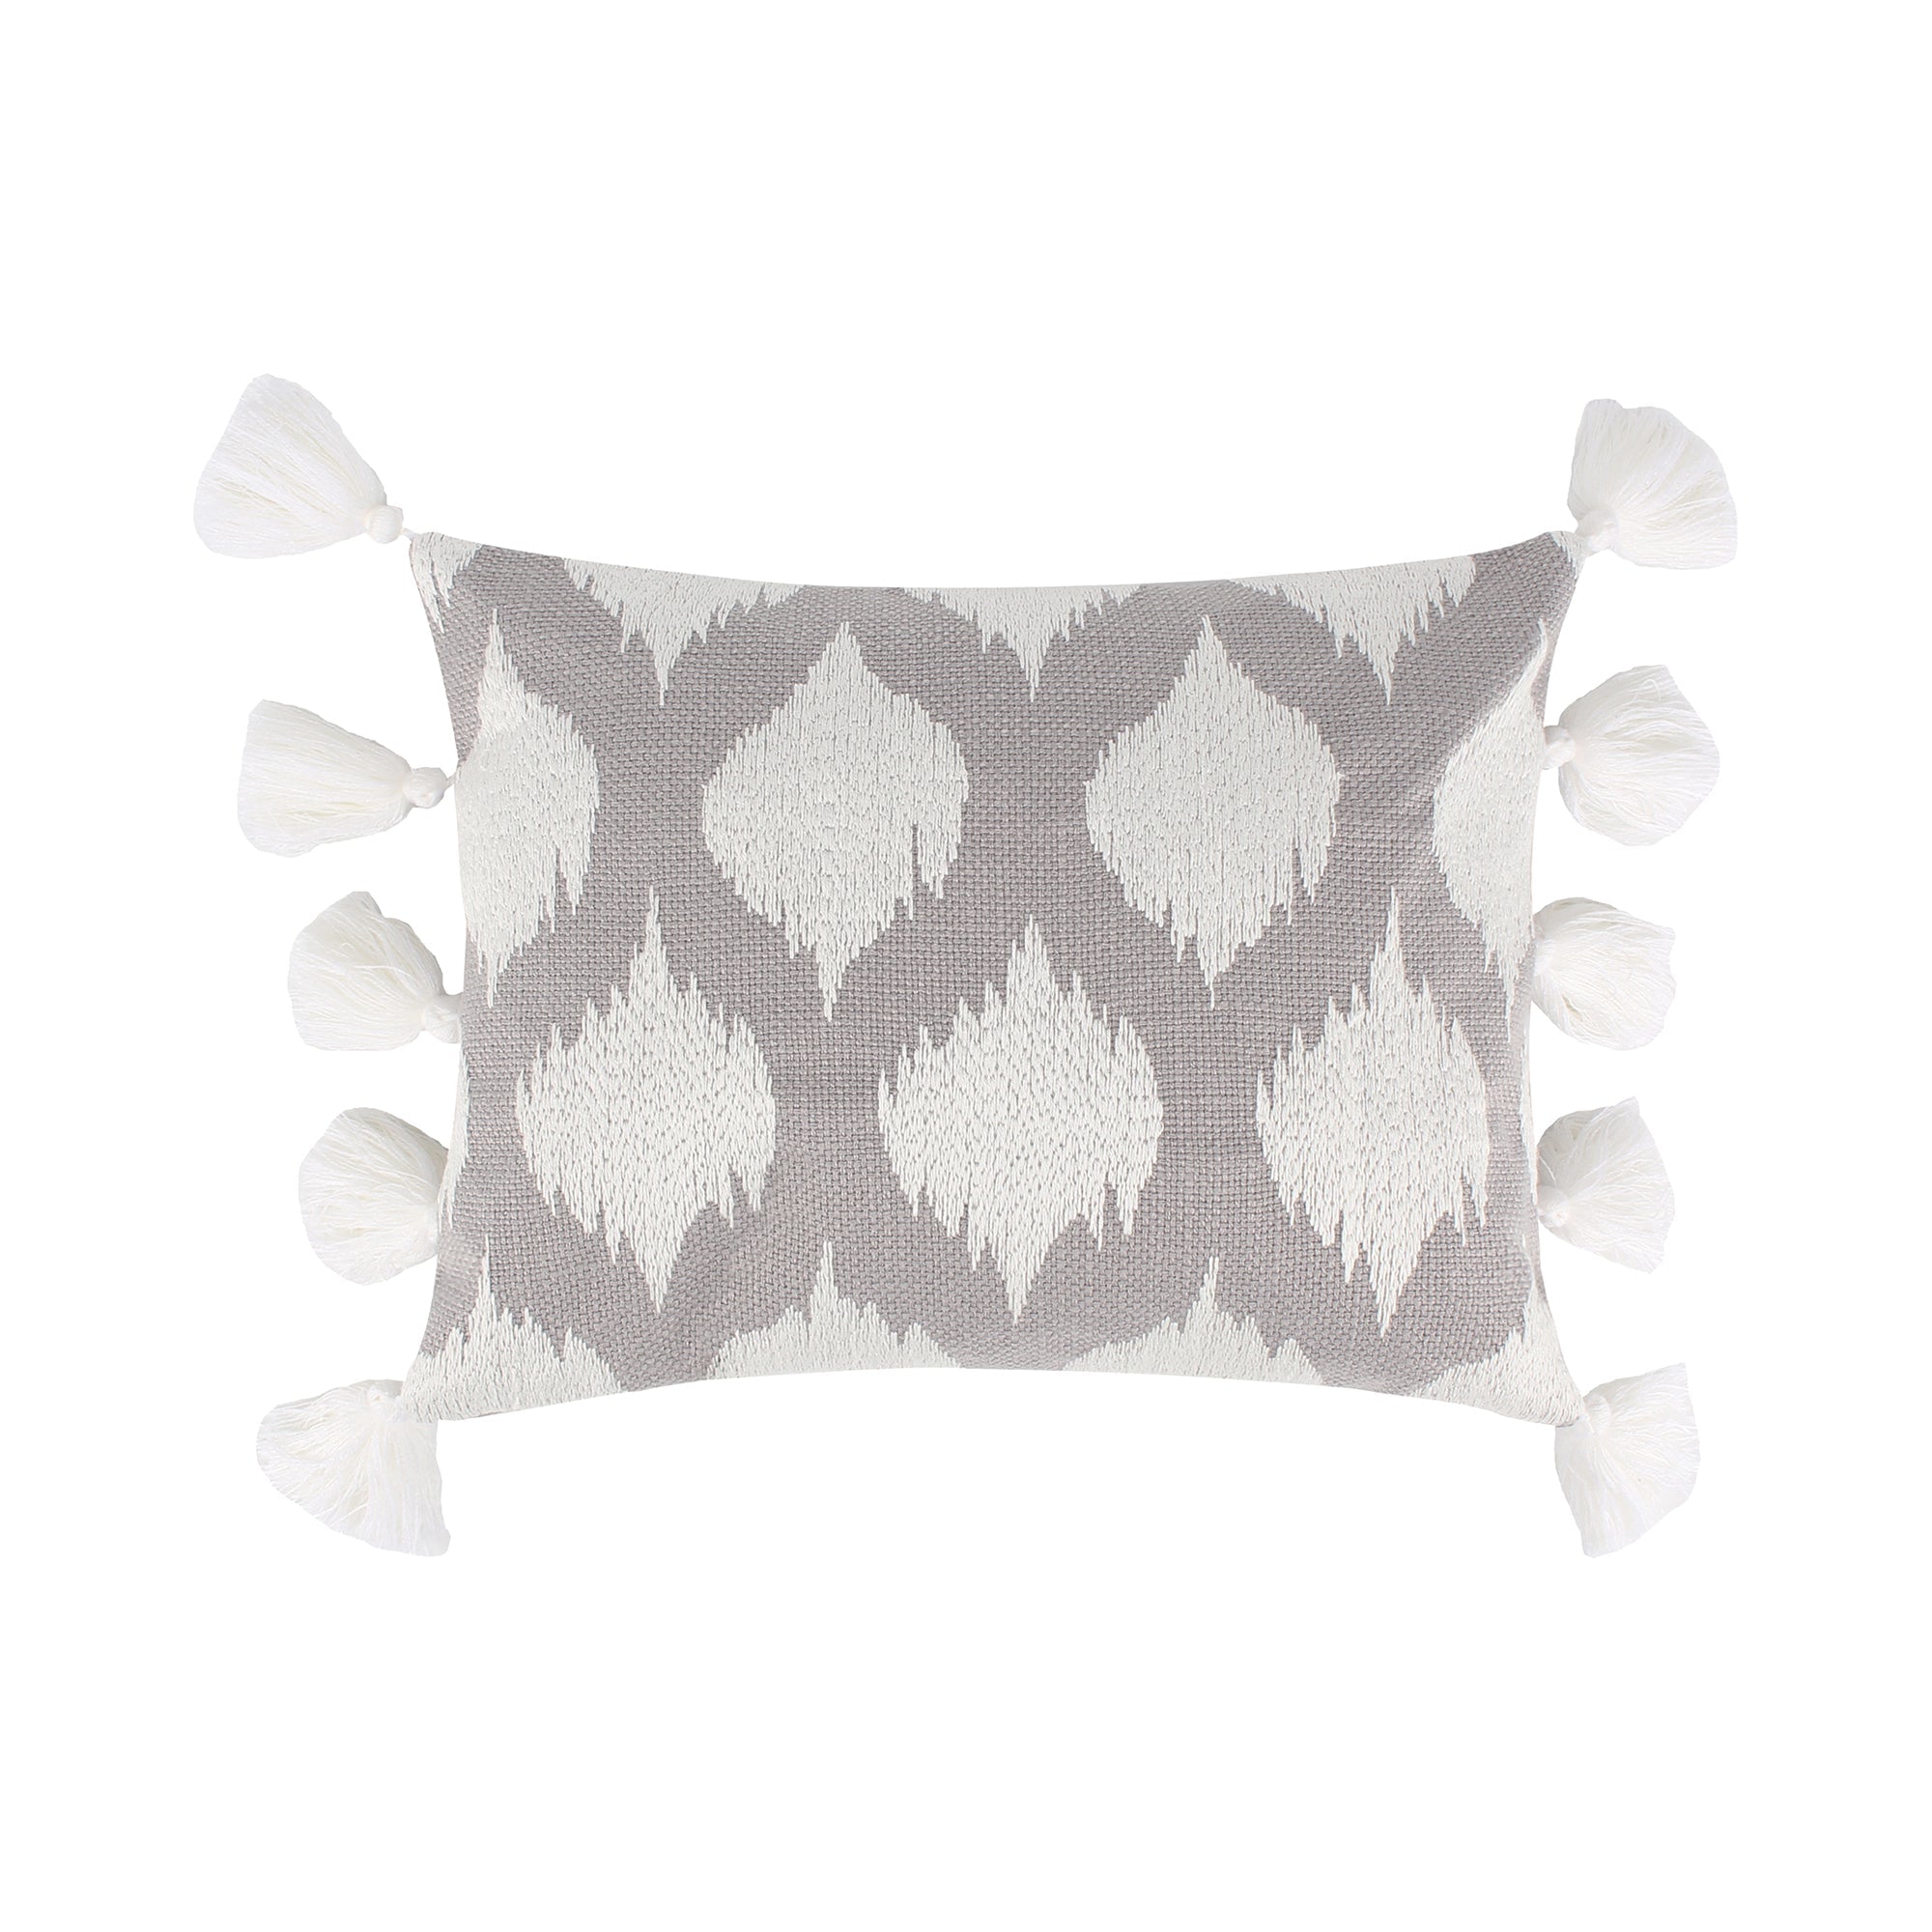 Wexford Grey Tassel Pillow